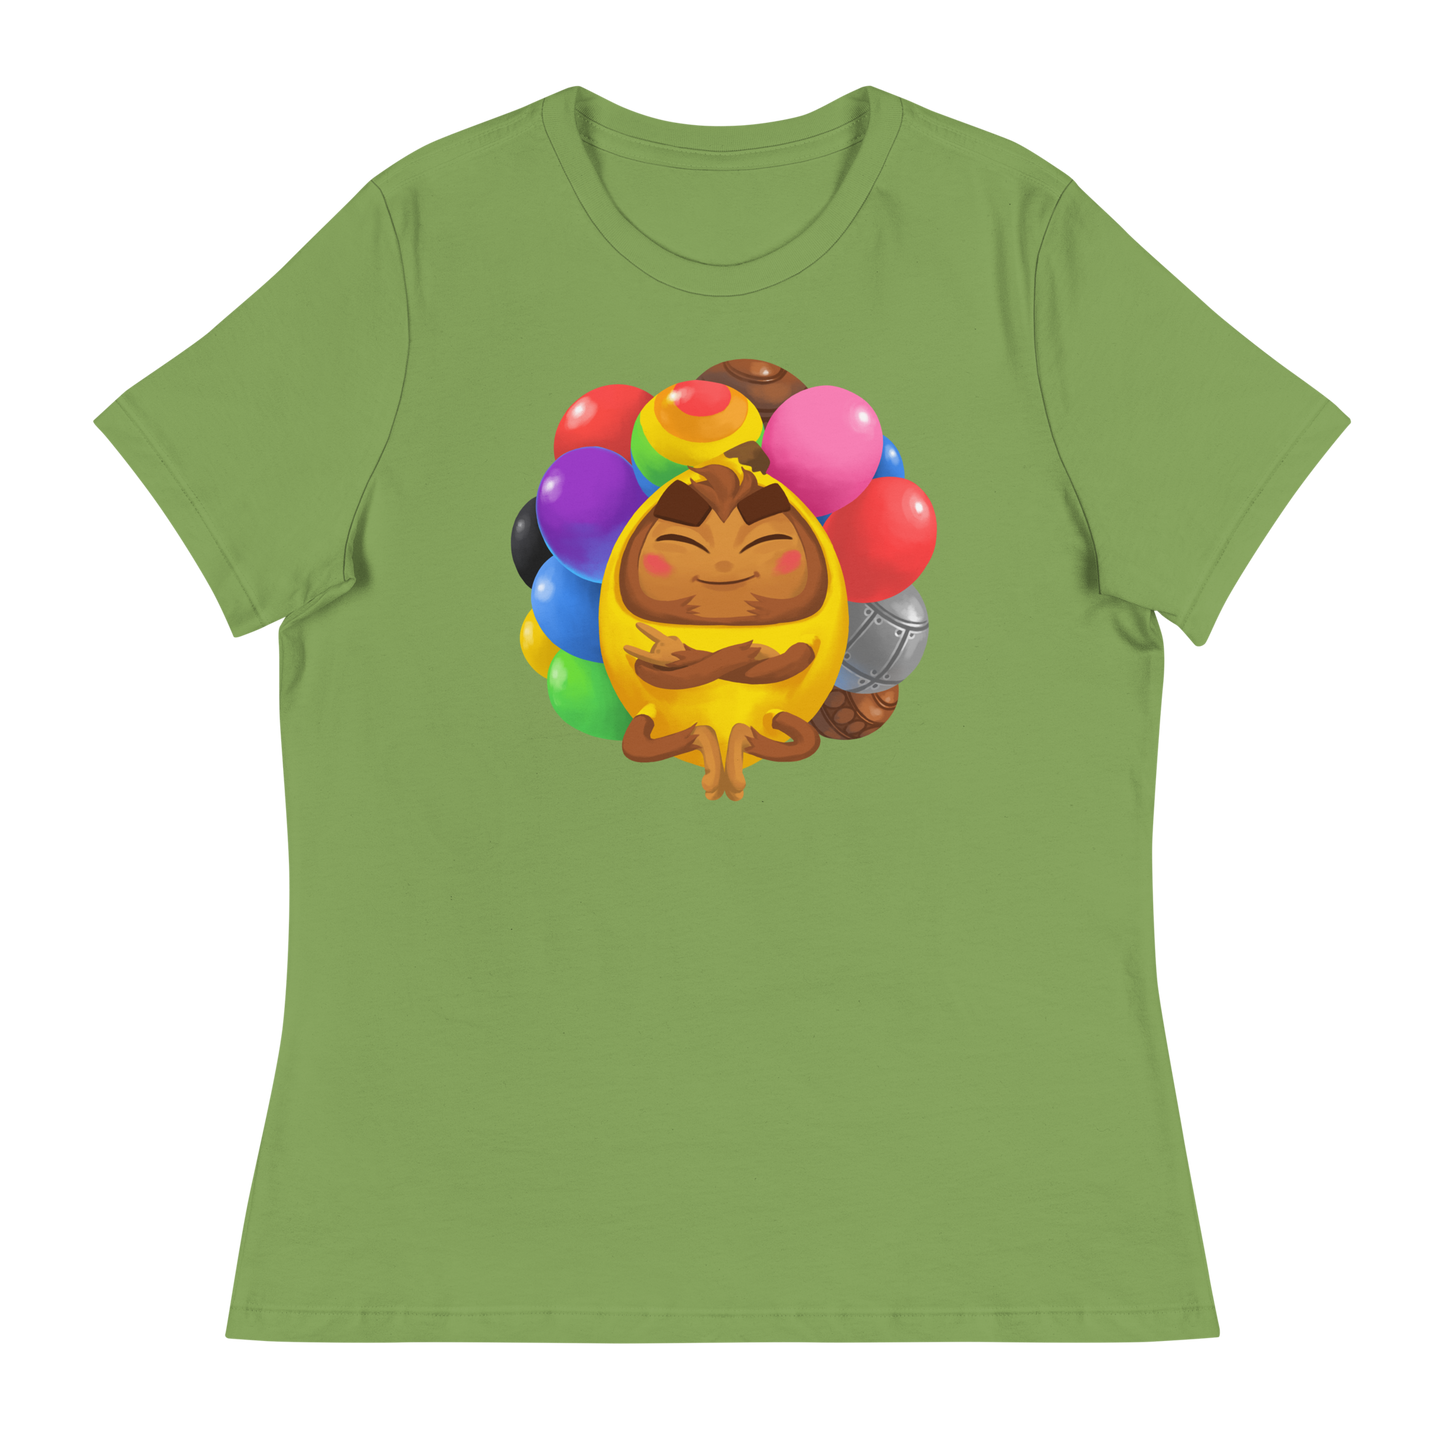 Cool Banana Monkey Shirt (Women's)